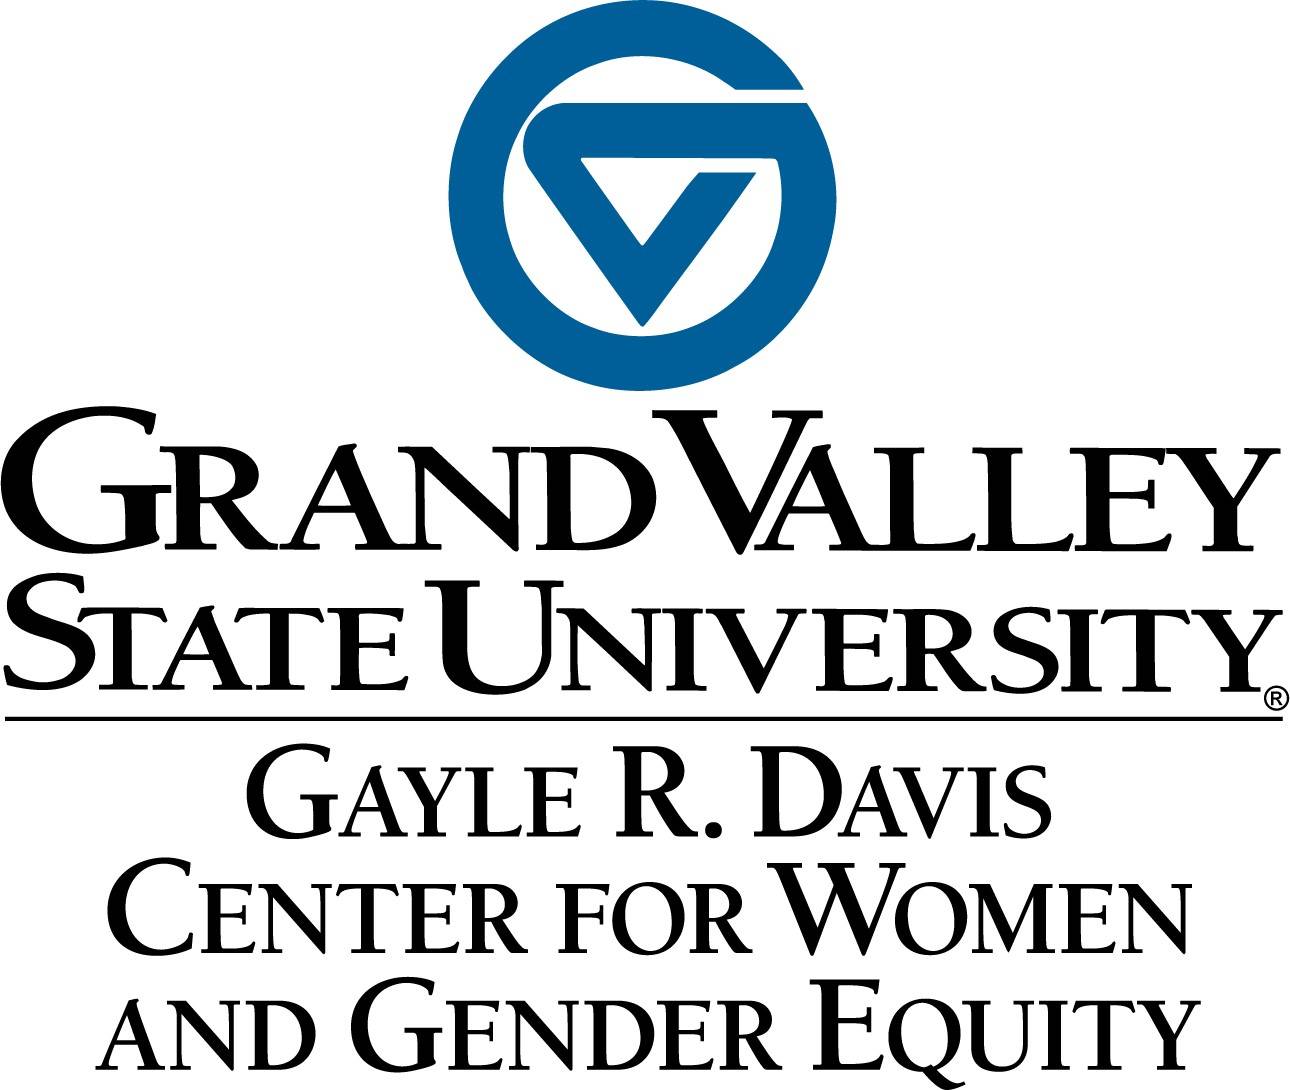 Image of Gayle R. Davis Center for Women and Gender Equity logo